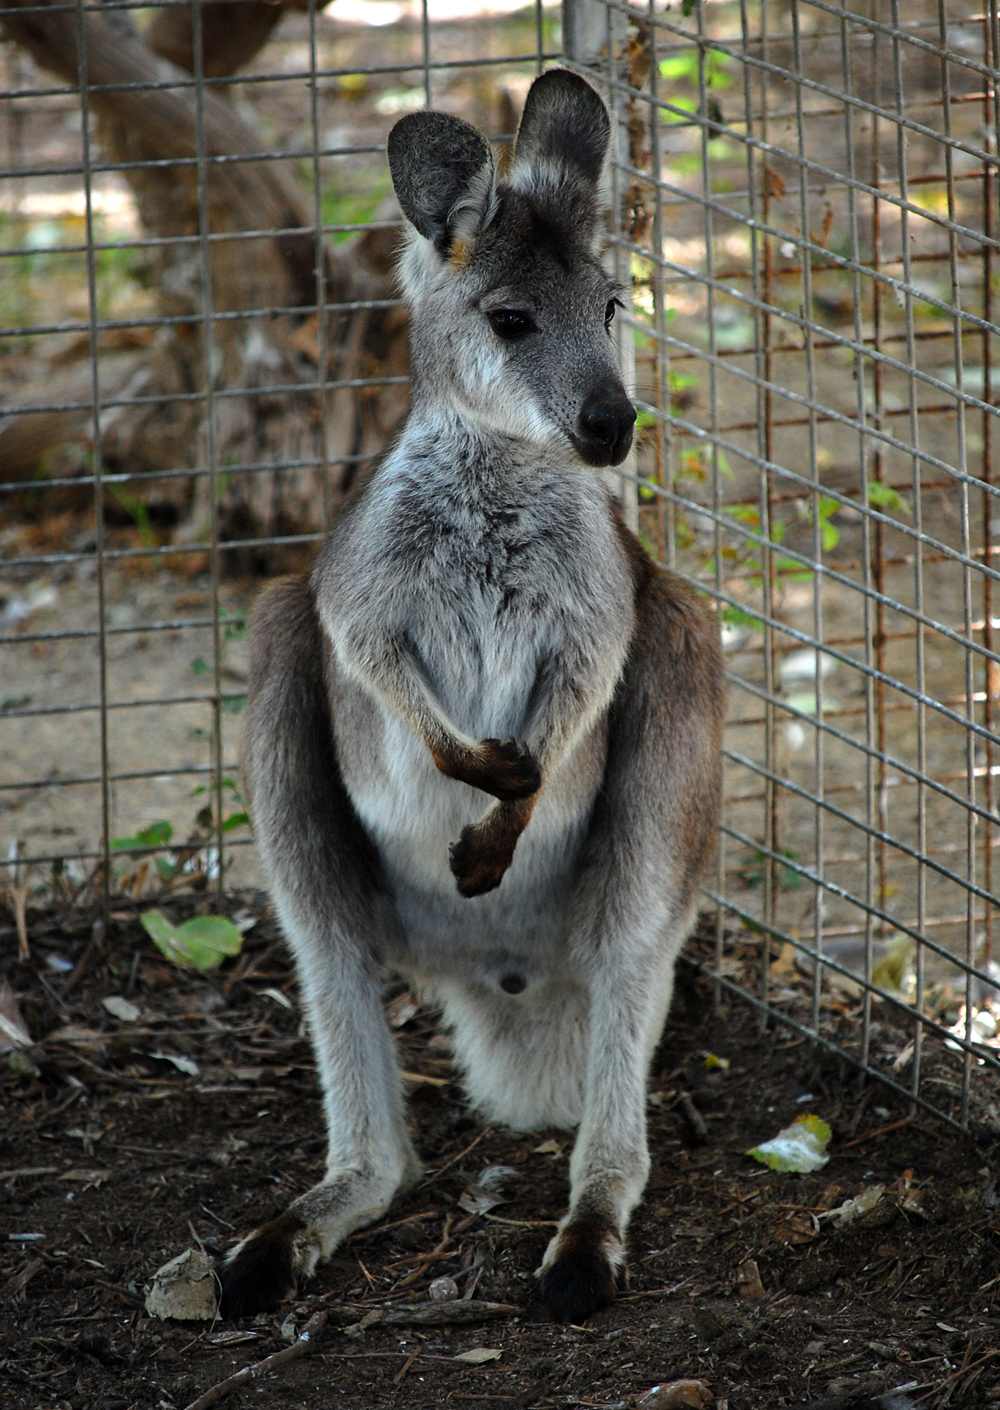 Eastern Wallaroo - Australian Mammals - Ark.net.au